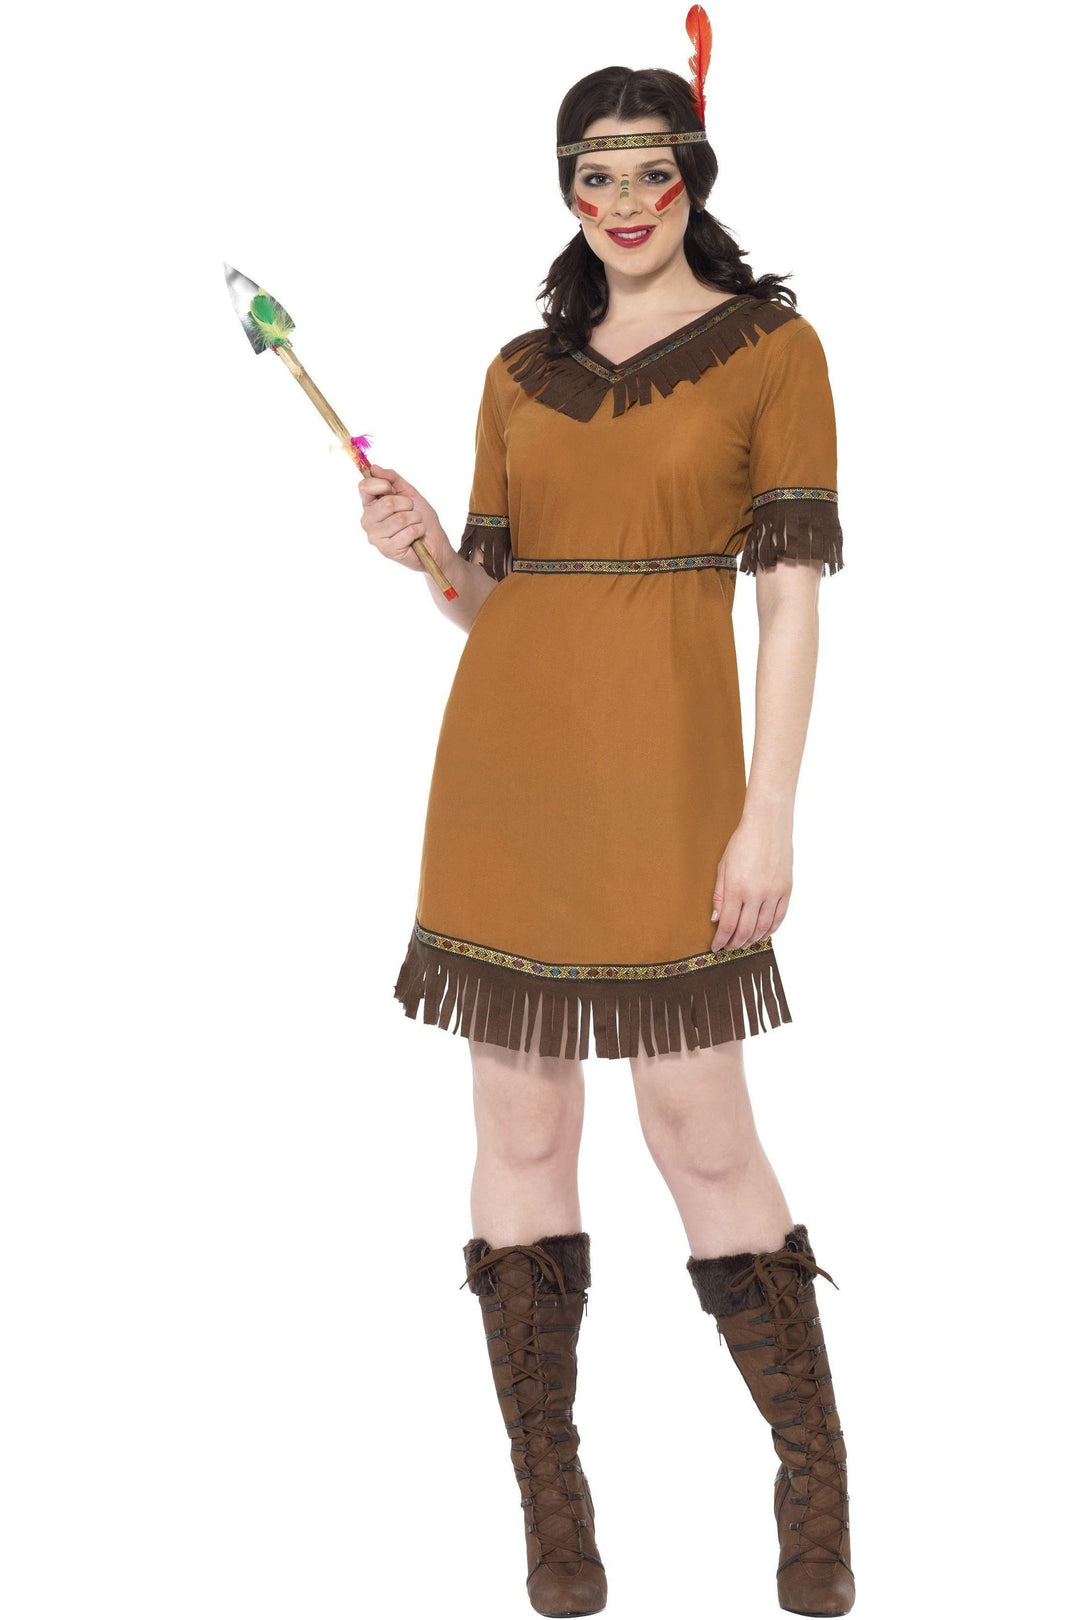 Native American Maiden Costume